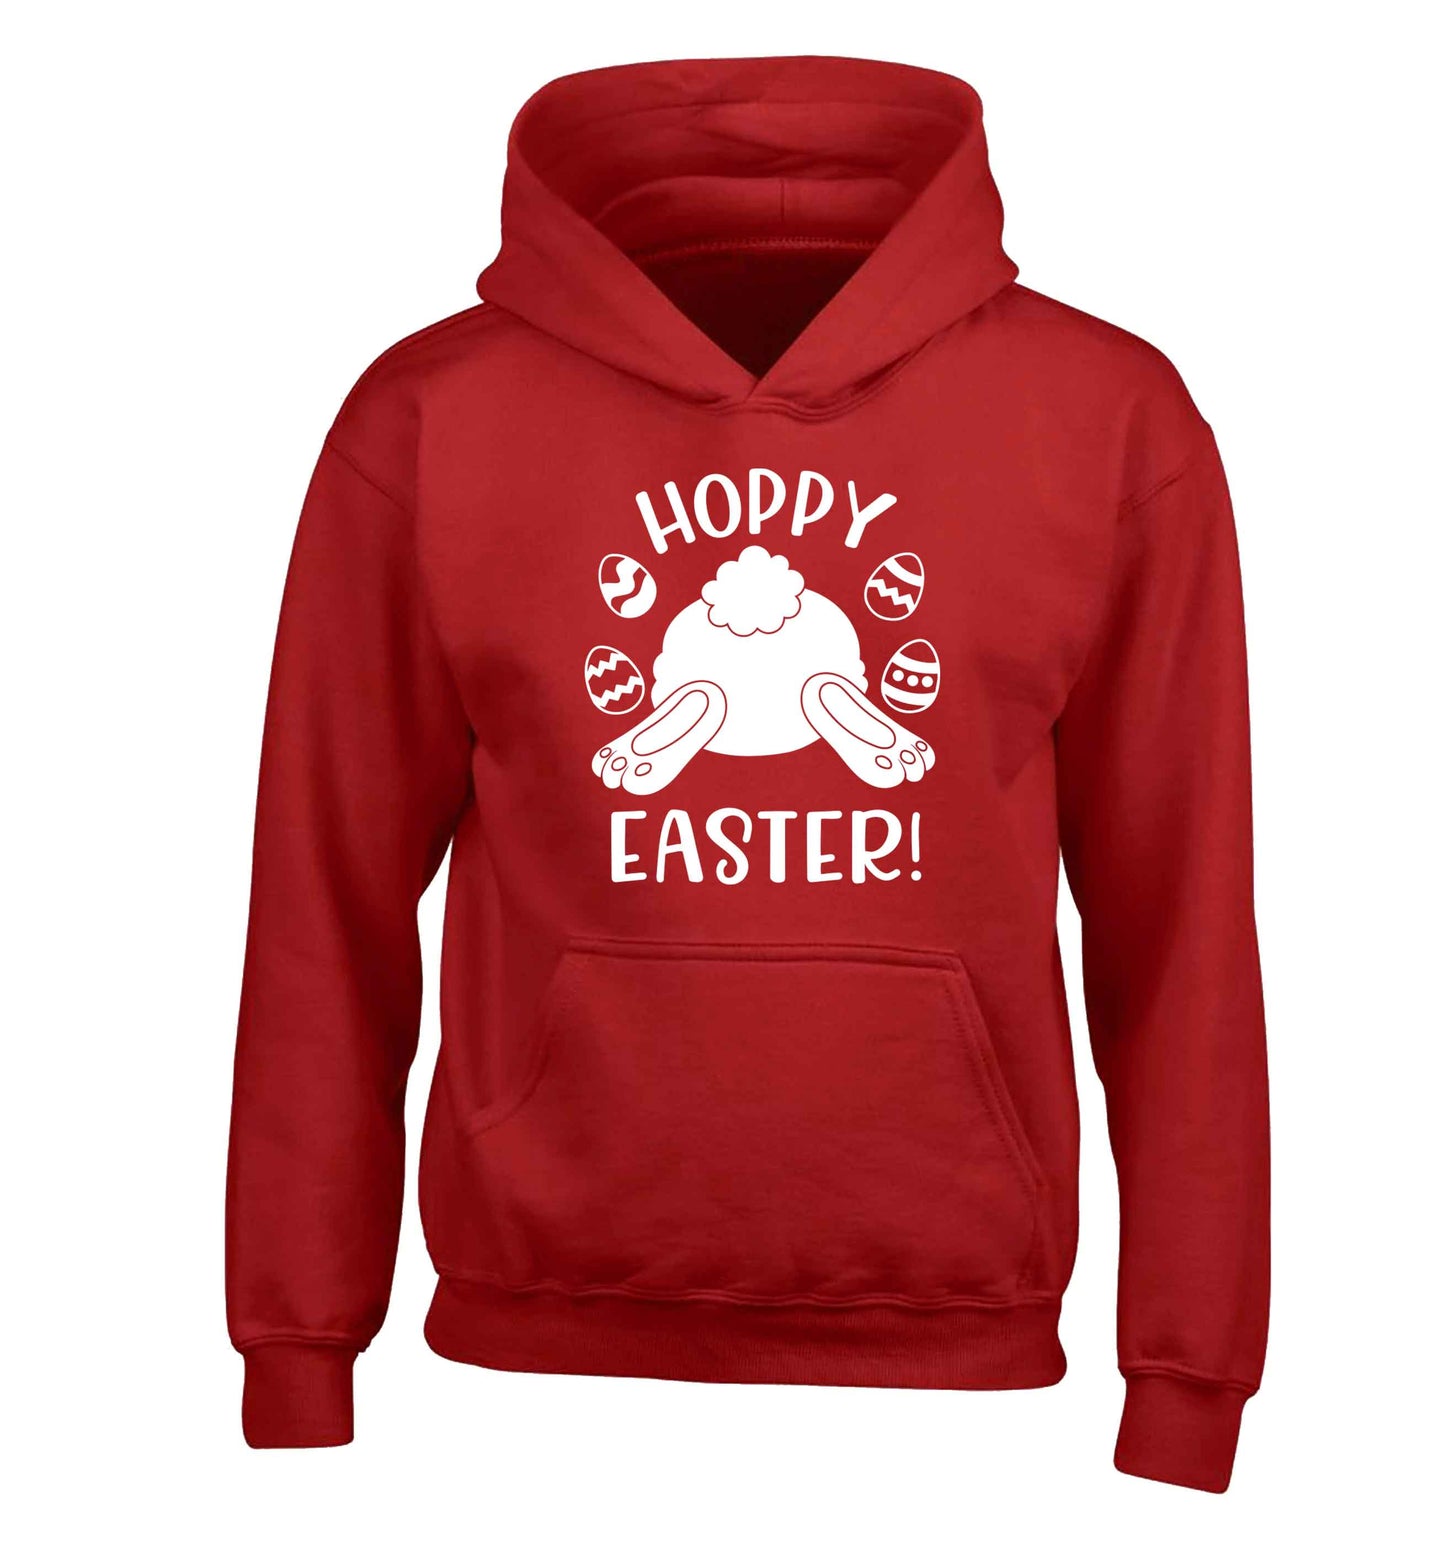 Hoppy Easter children's red hoodie 12-13 Years